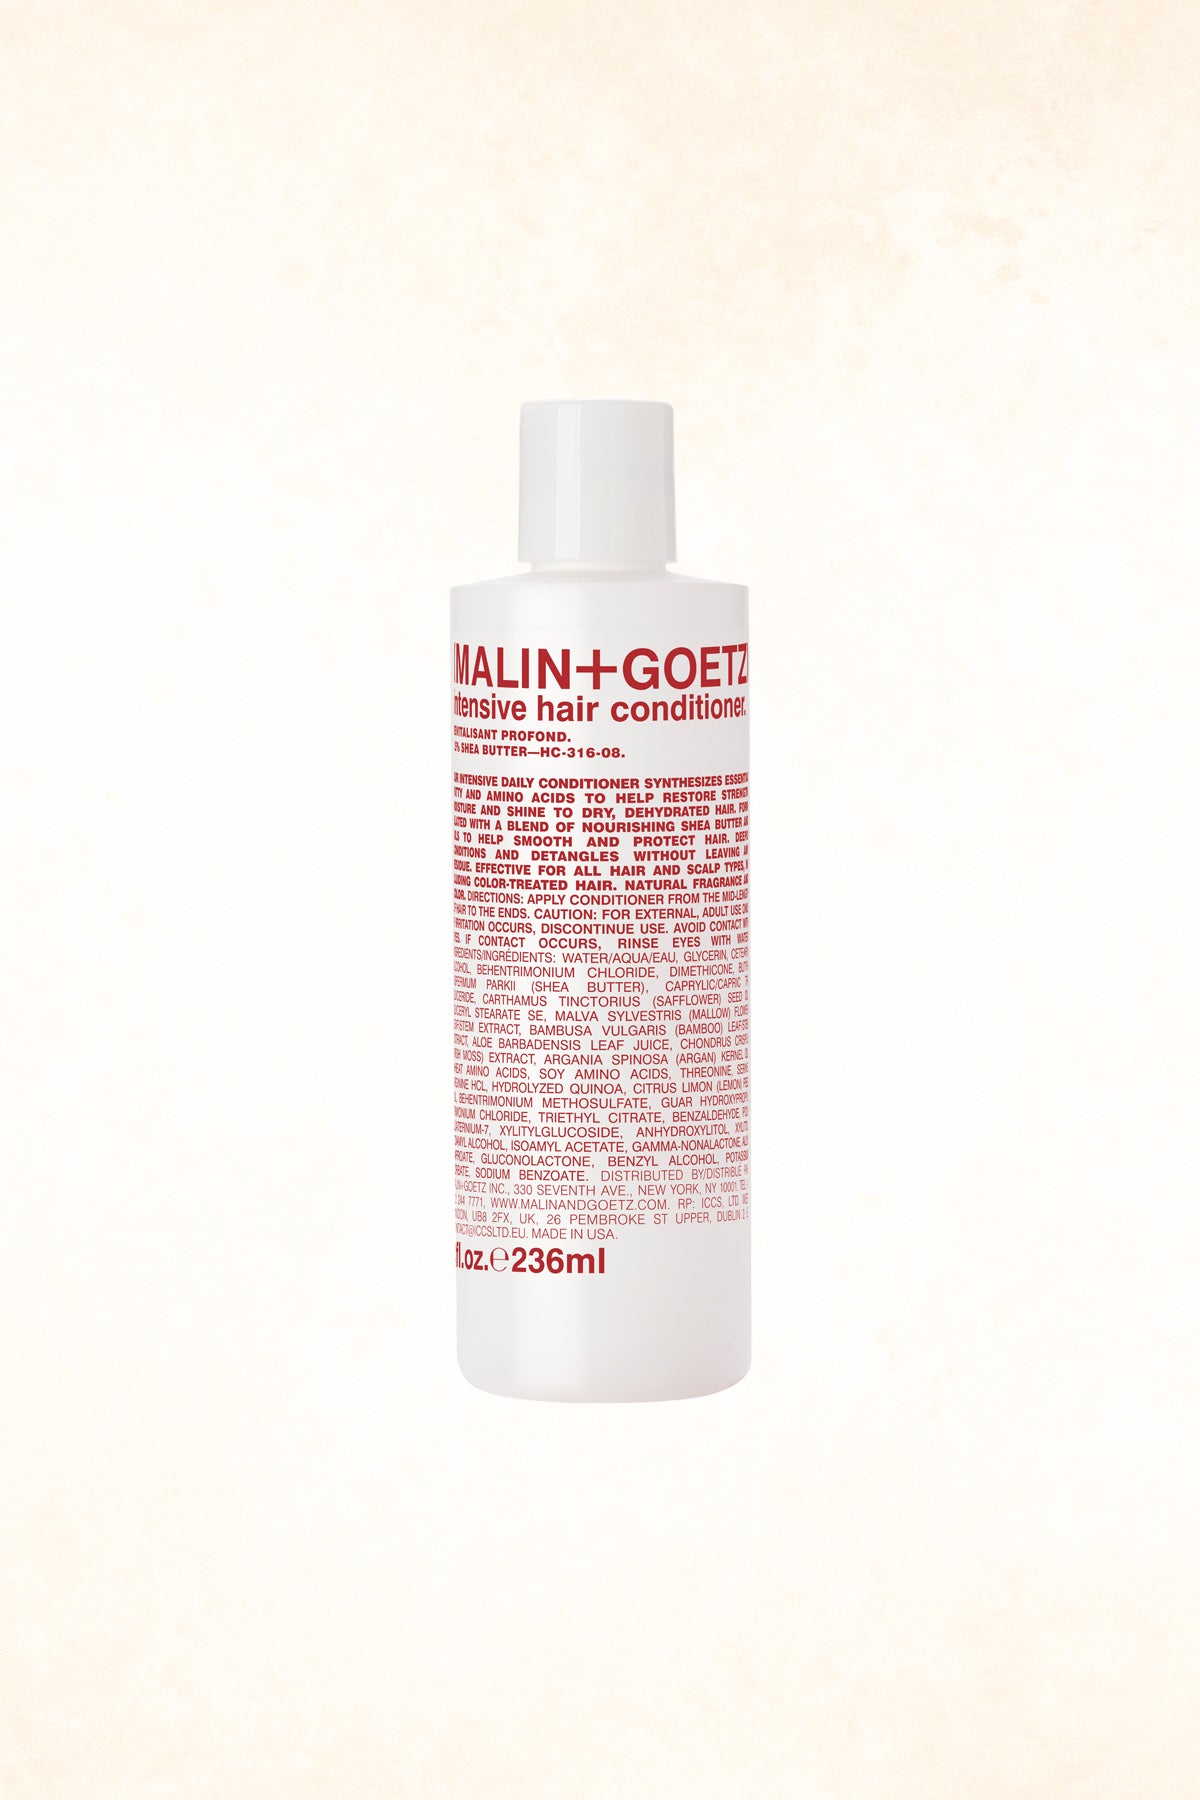 Malin+Goetz – Intensive Hair Conditioner 8 oz / 236 ml